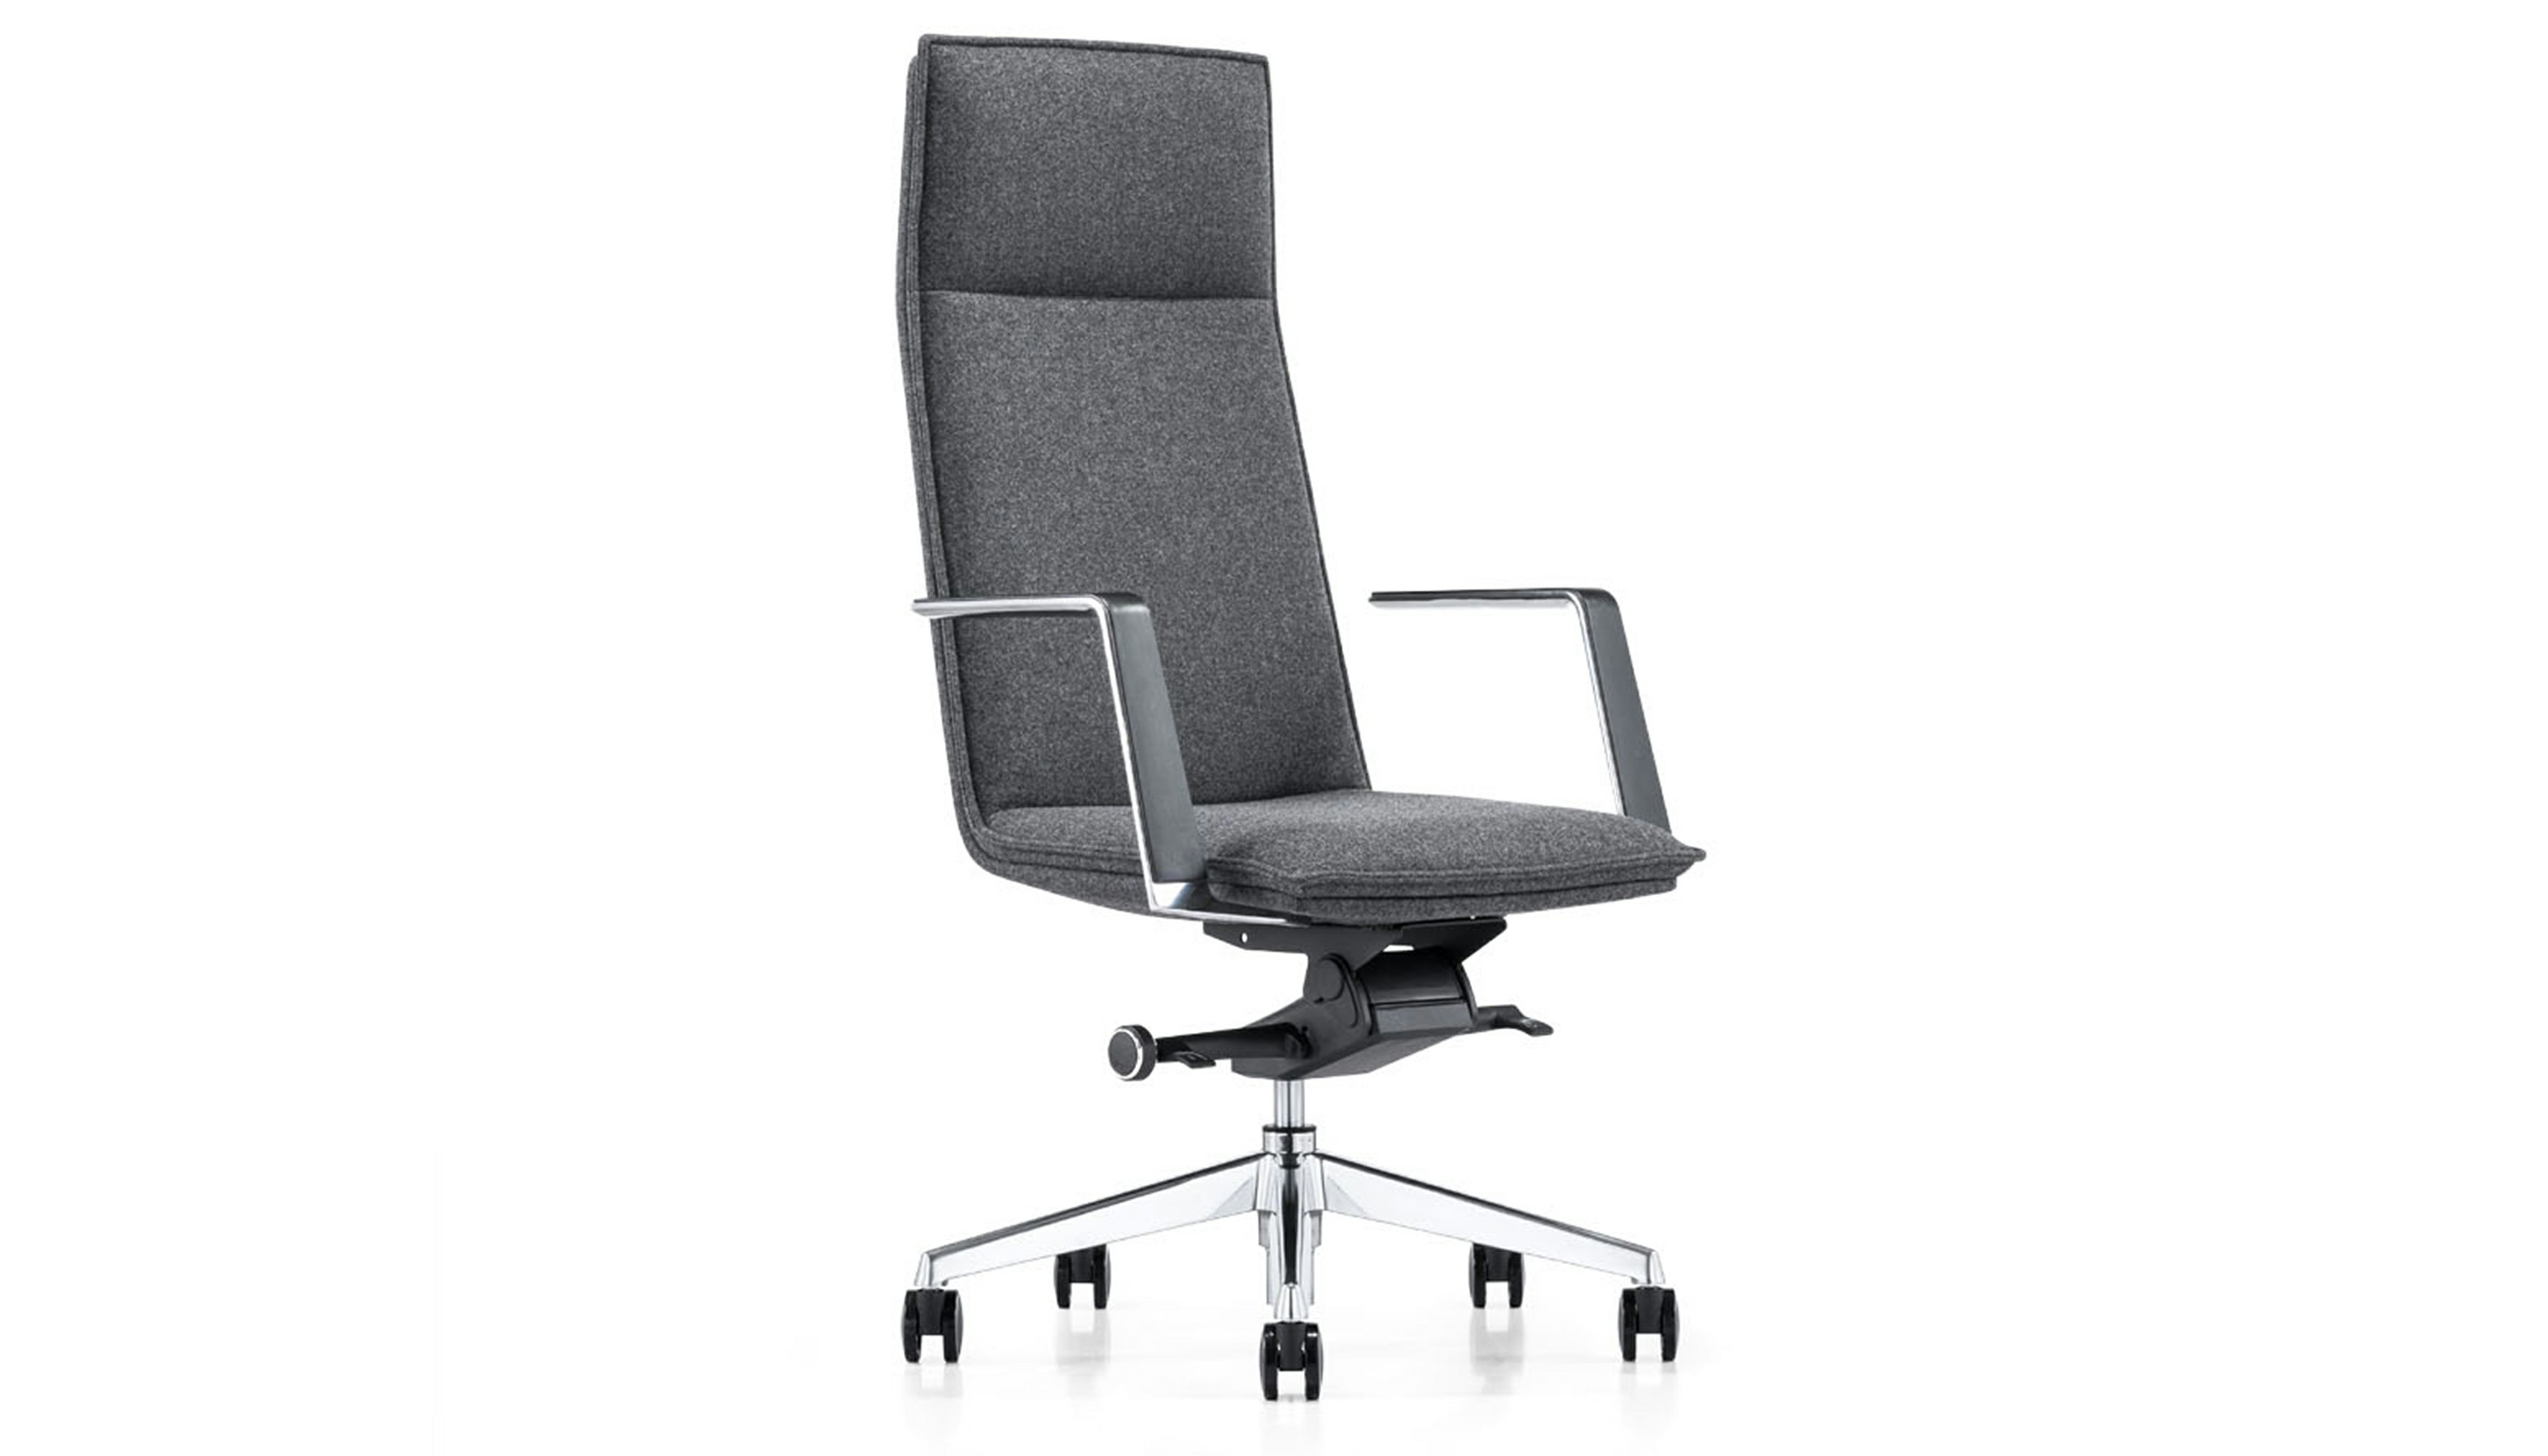 Adjustable height, slim and elegant executive chair